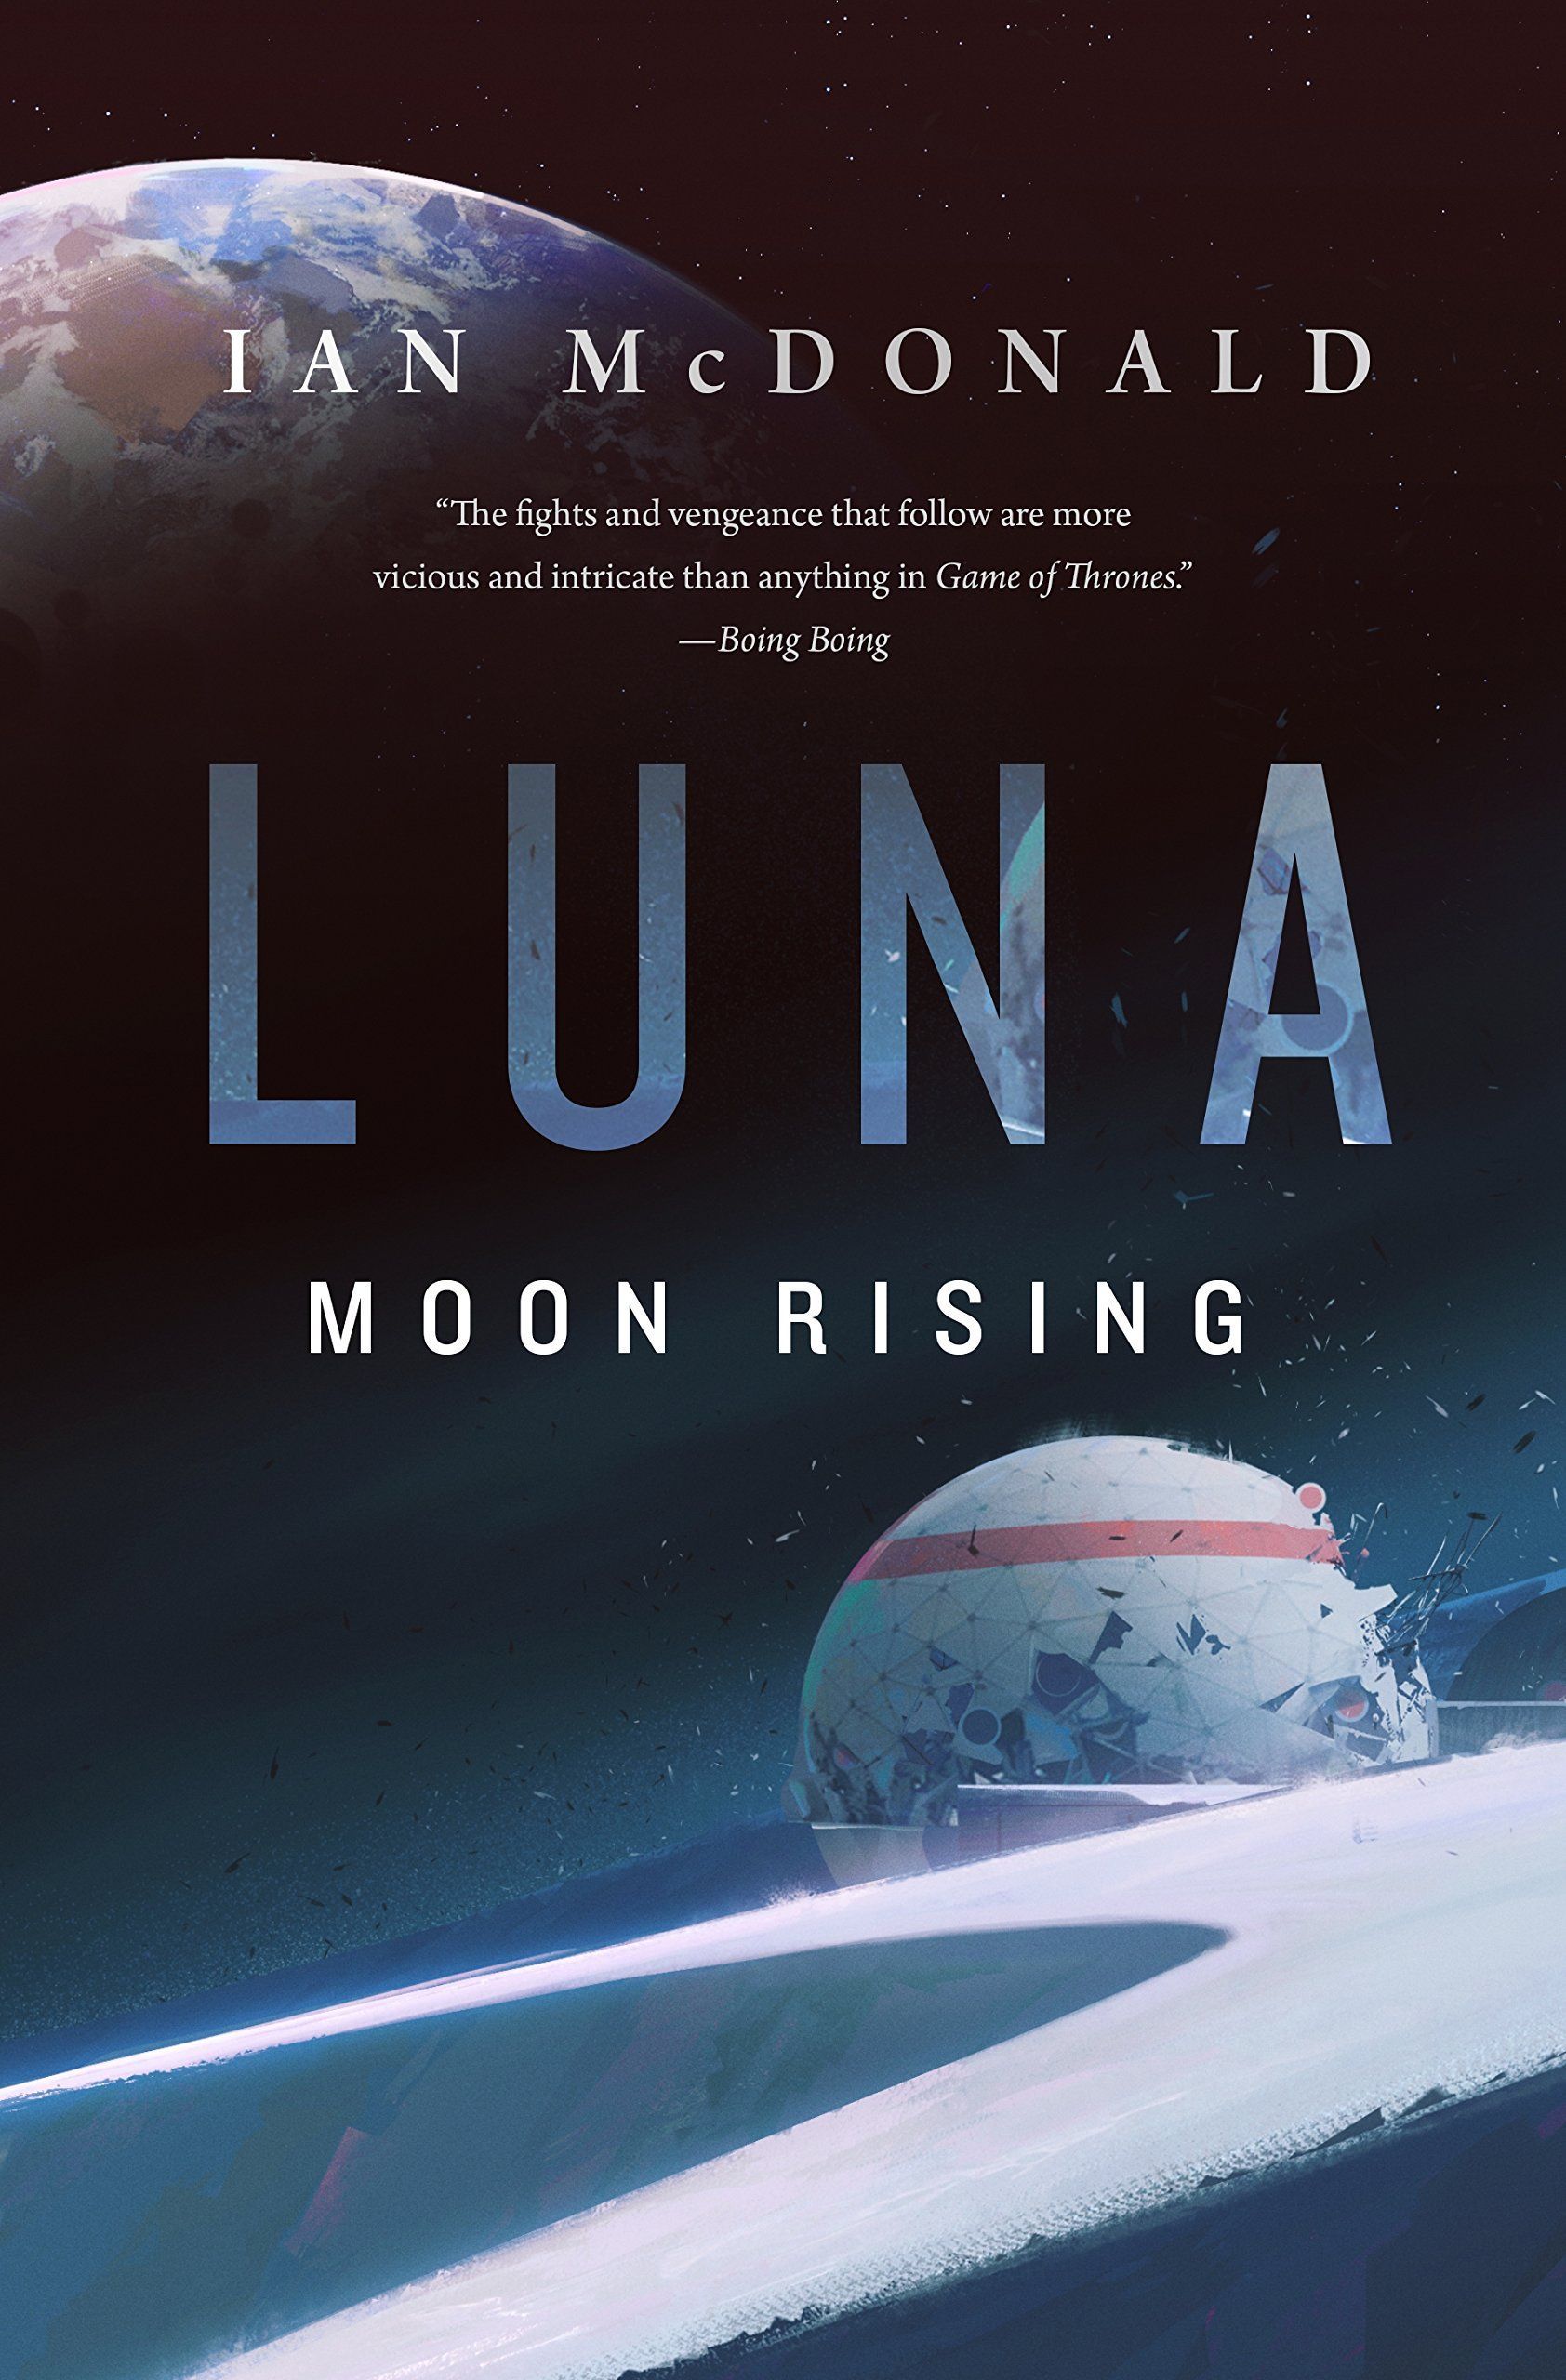 Banking on the Future: Ian McDonald’s “Luna: Moon Rising”